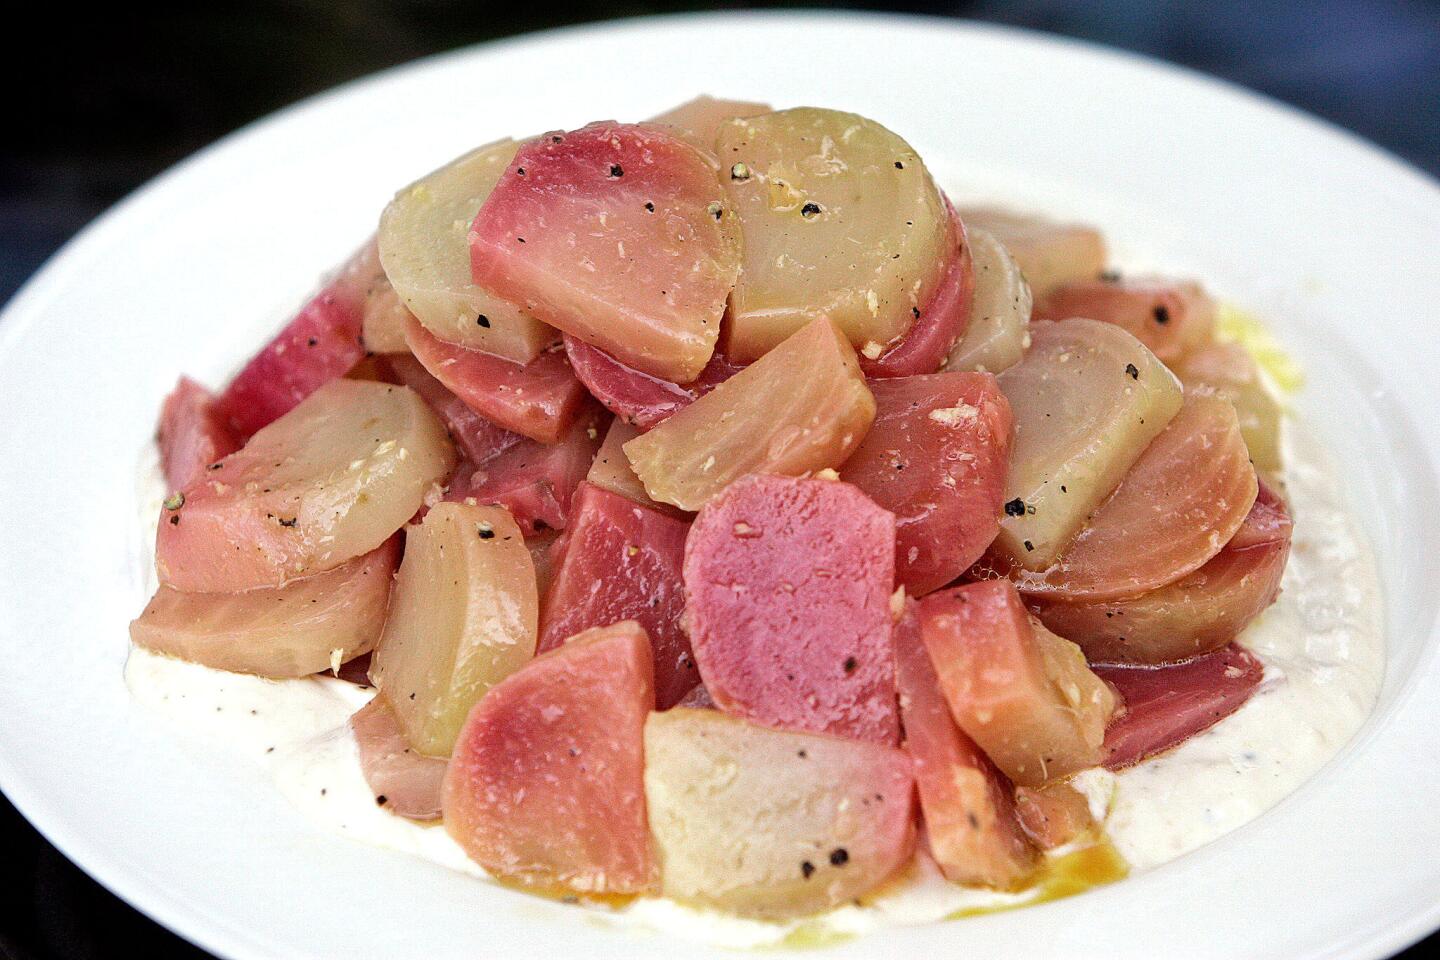 Chioggia beet salad with horseradish creme fraiche